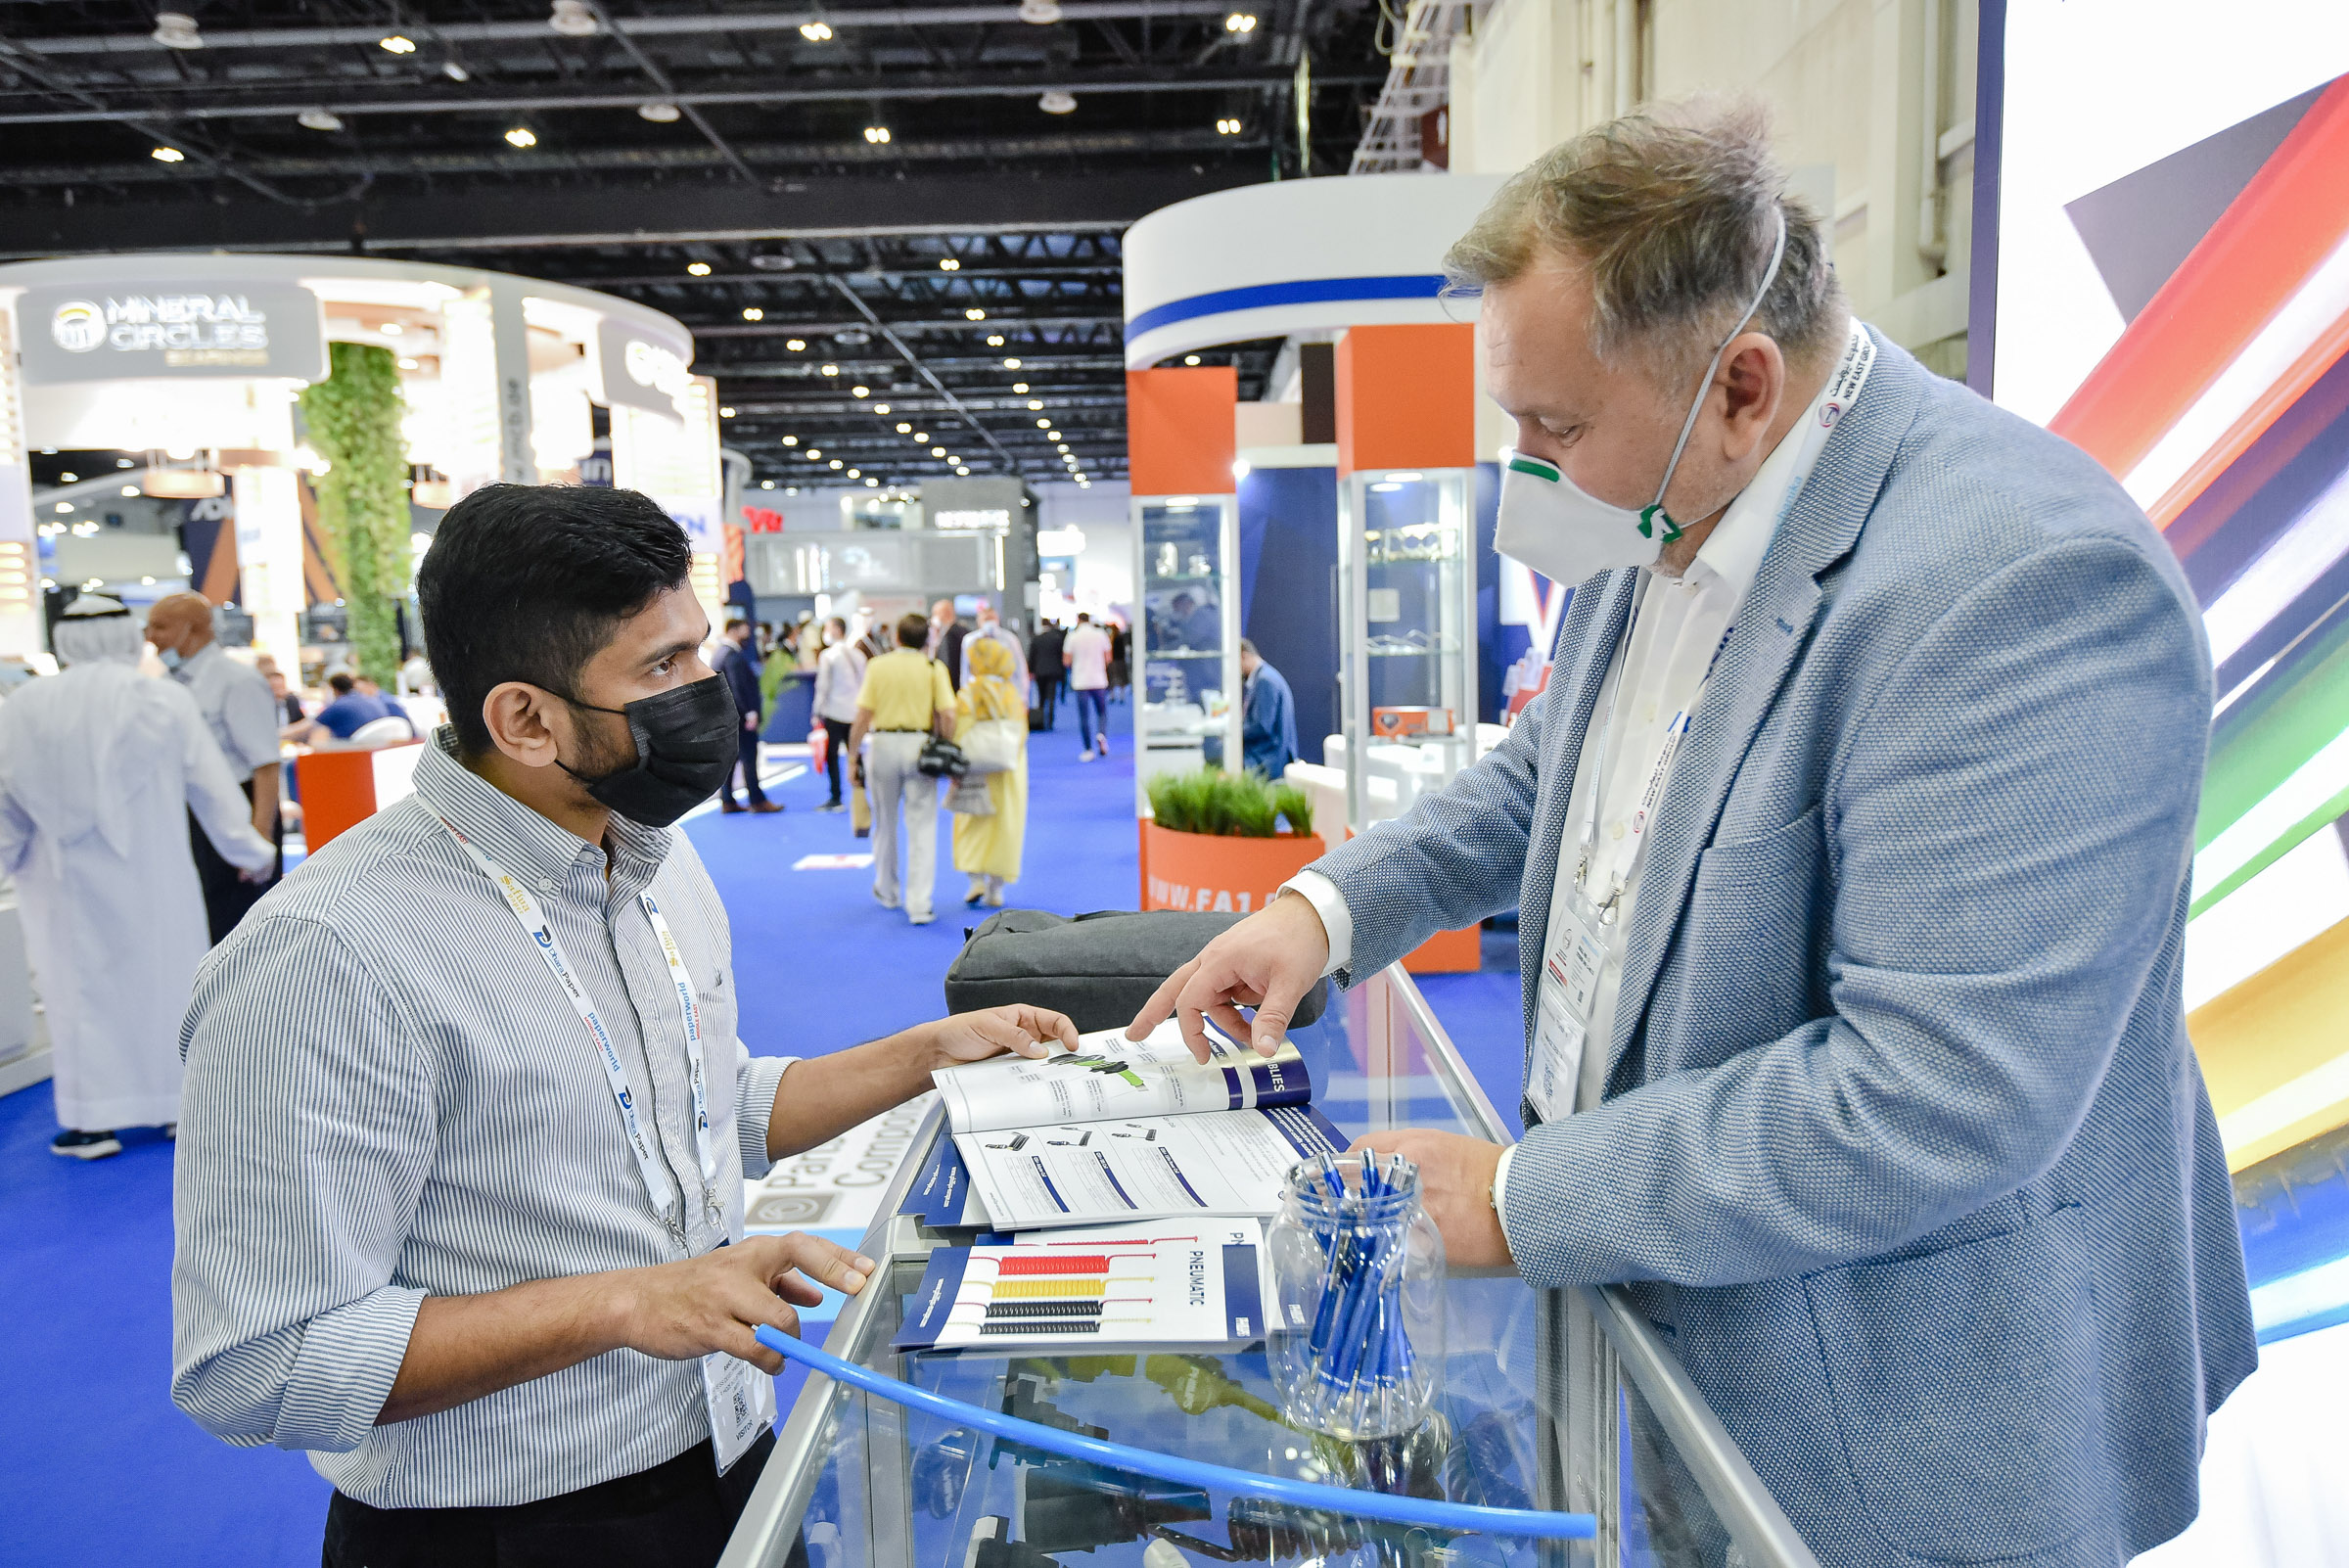 Exhibitors at Automechanika Dubai